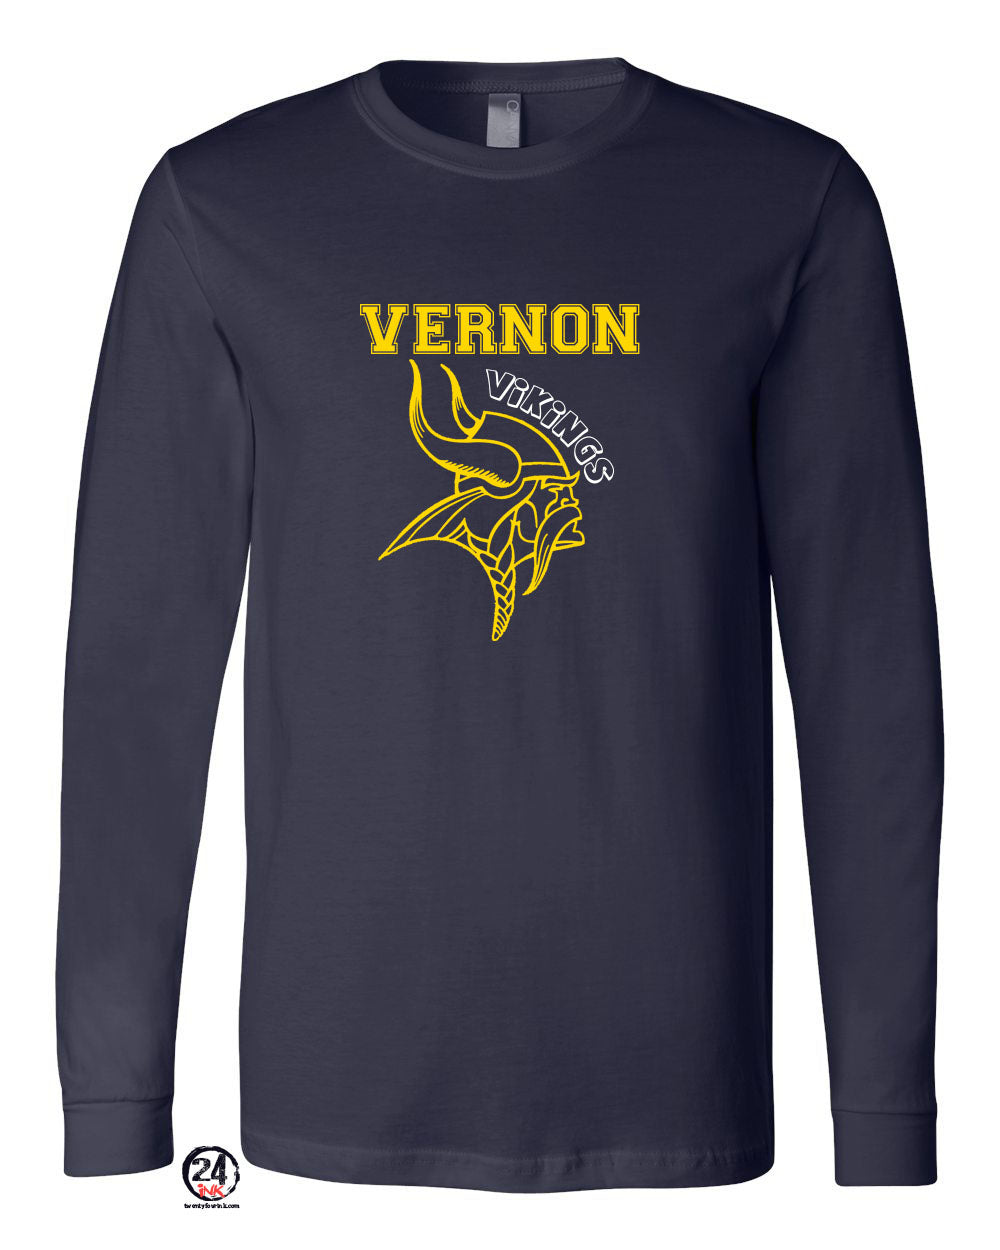 Vernon Design 6 Long Sleeve Shirt